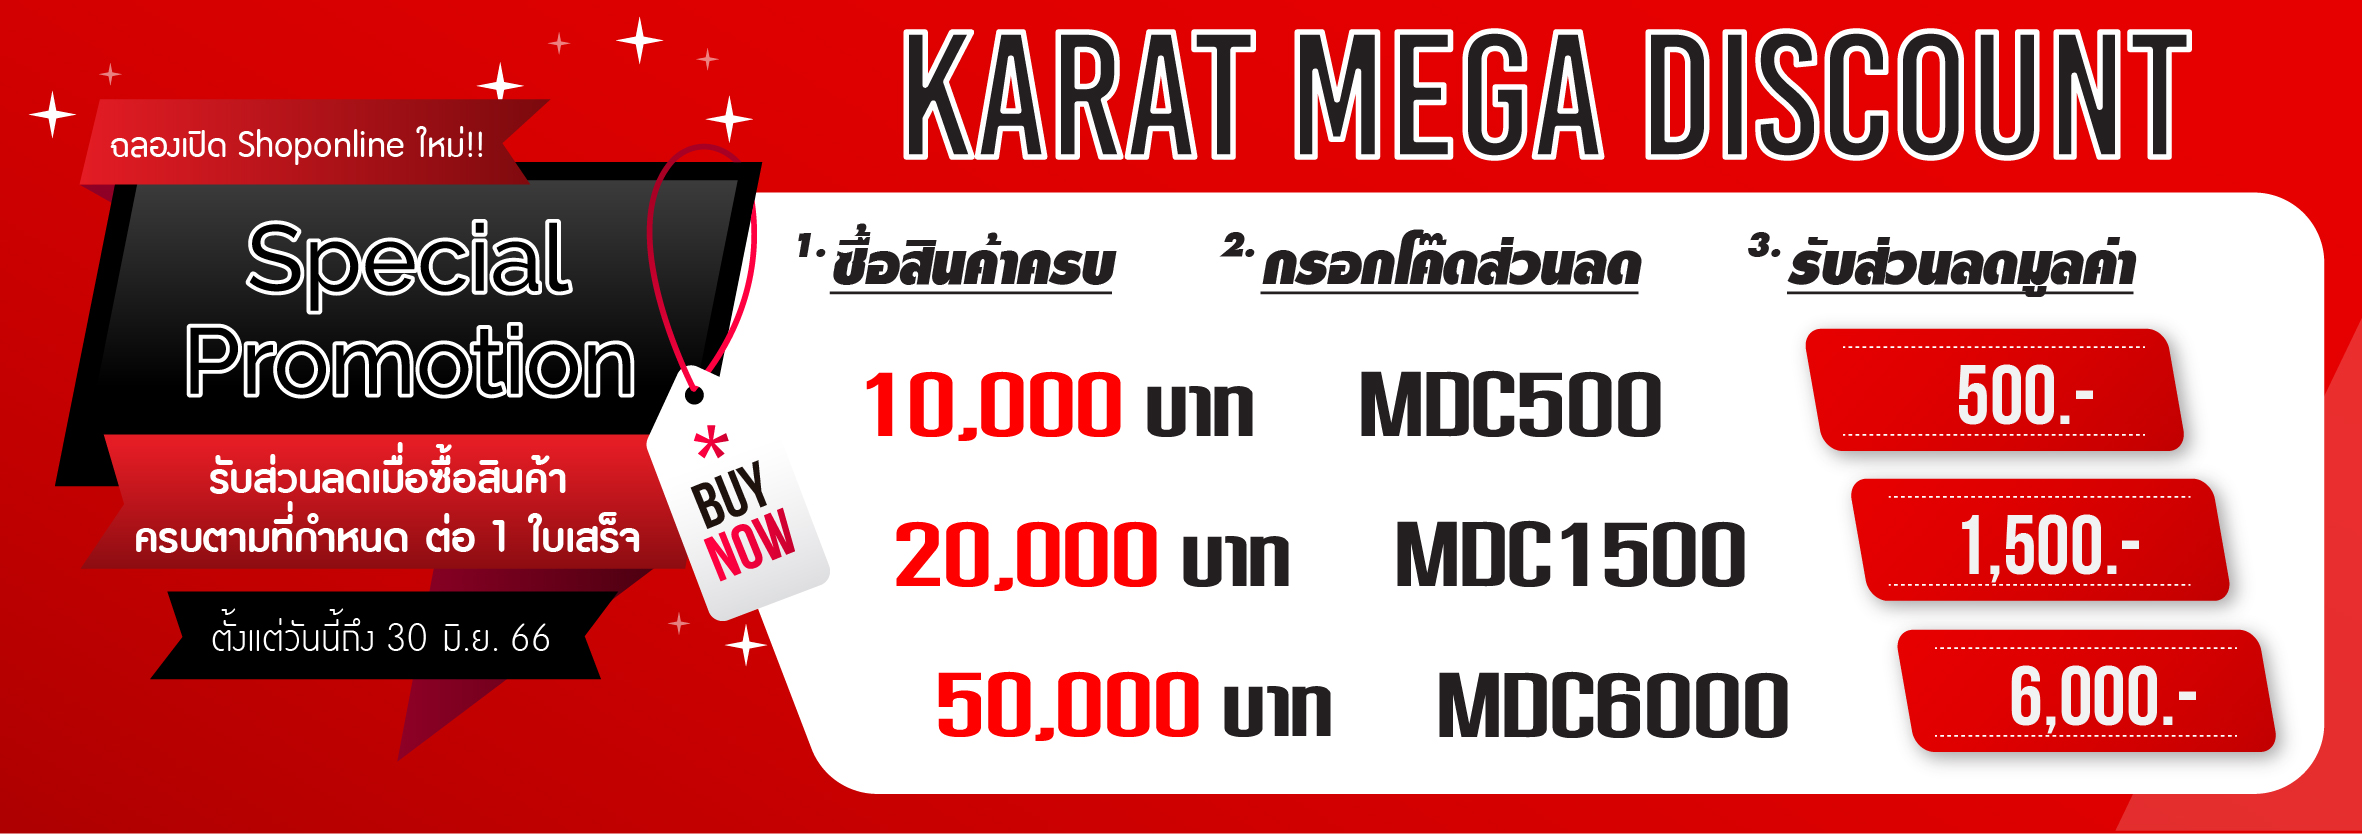 Banner 567x200 px Karat Mega Discount_แบบ2_30 มิ.ย. 66-01